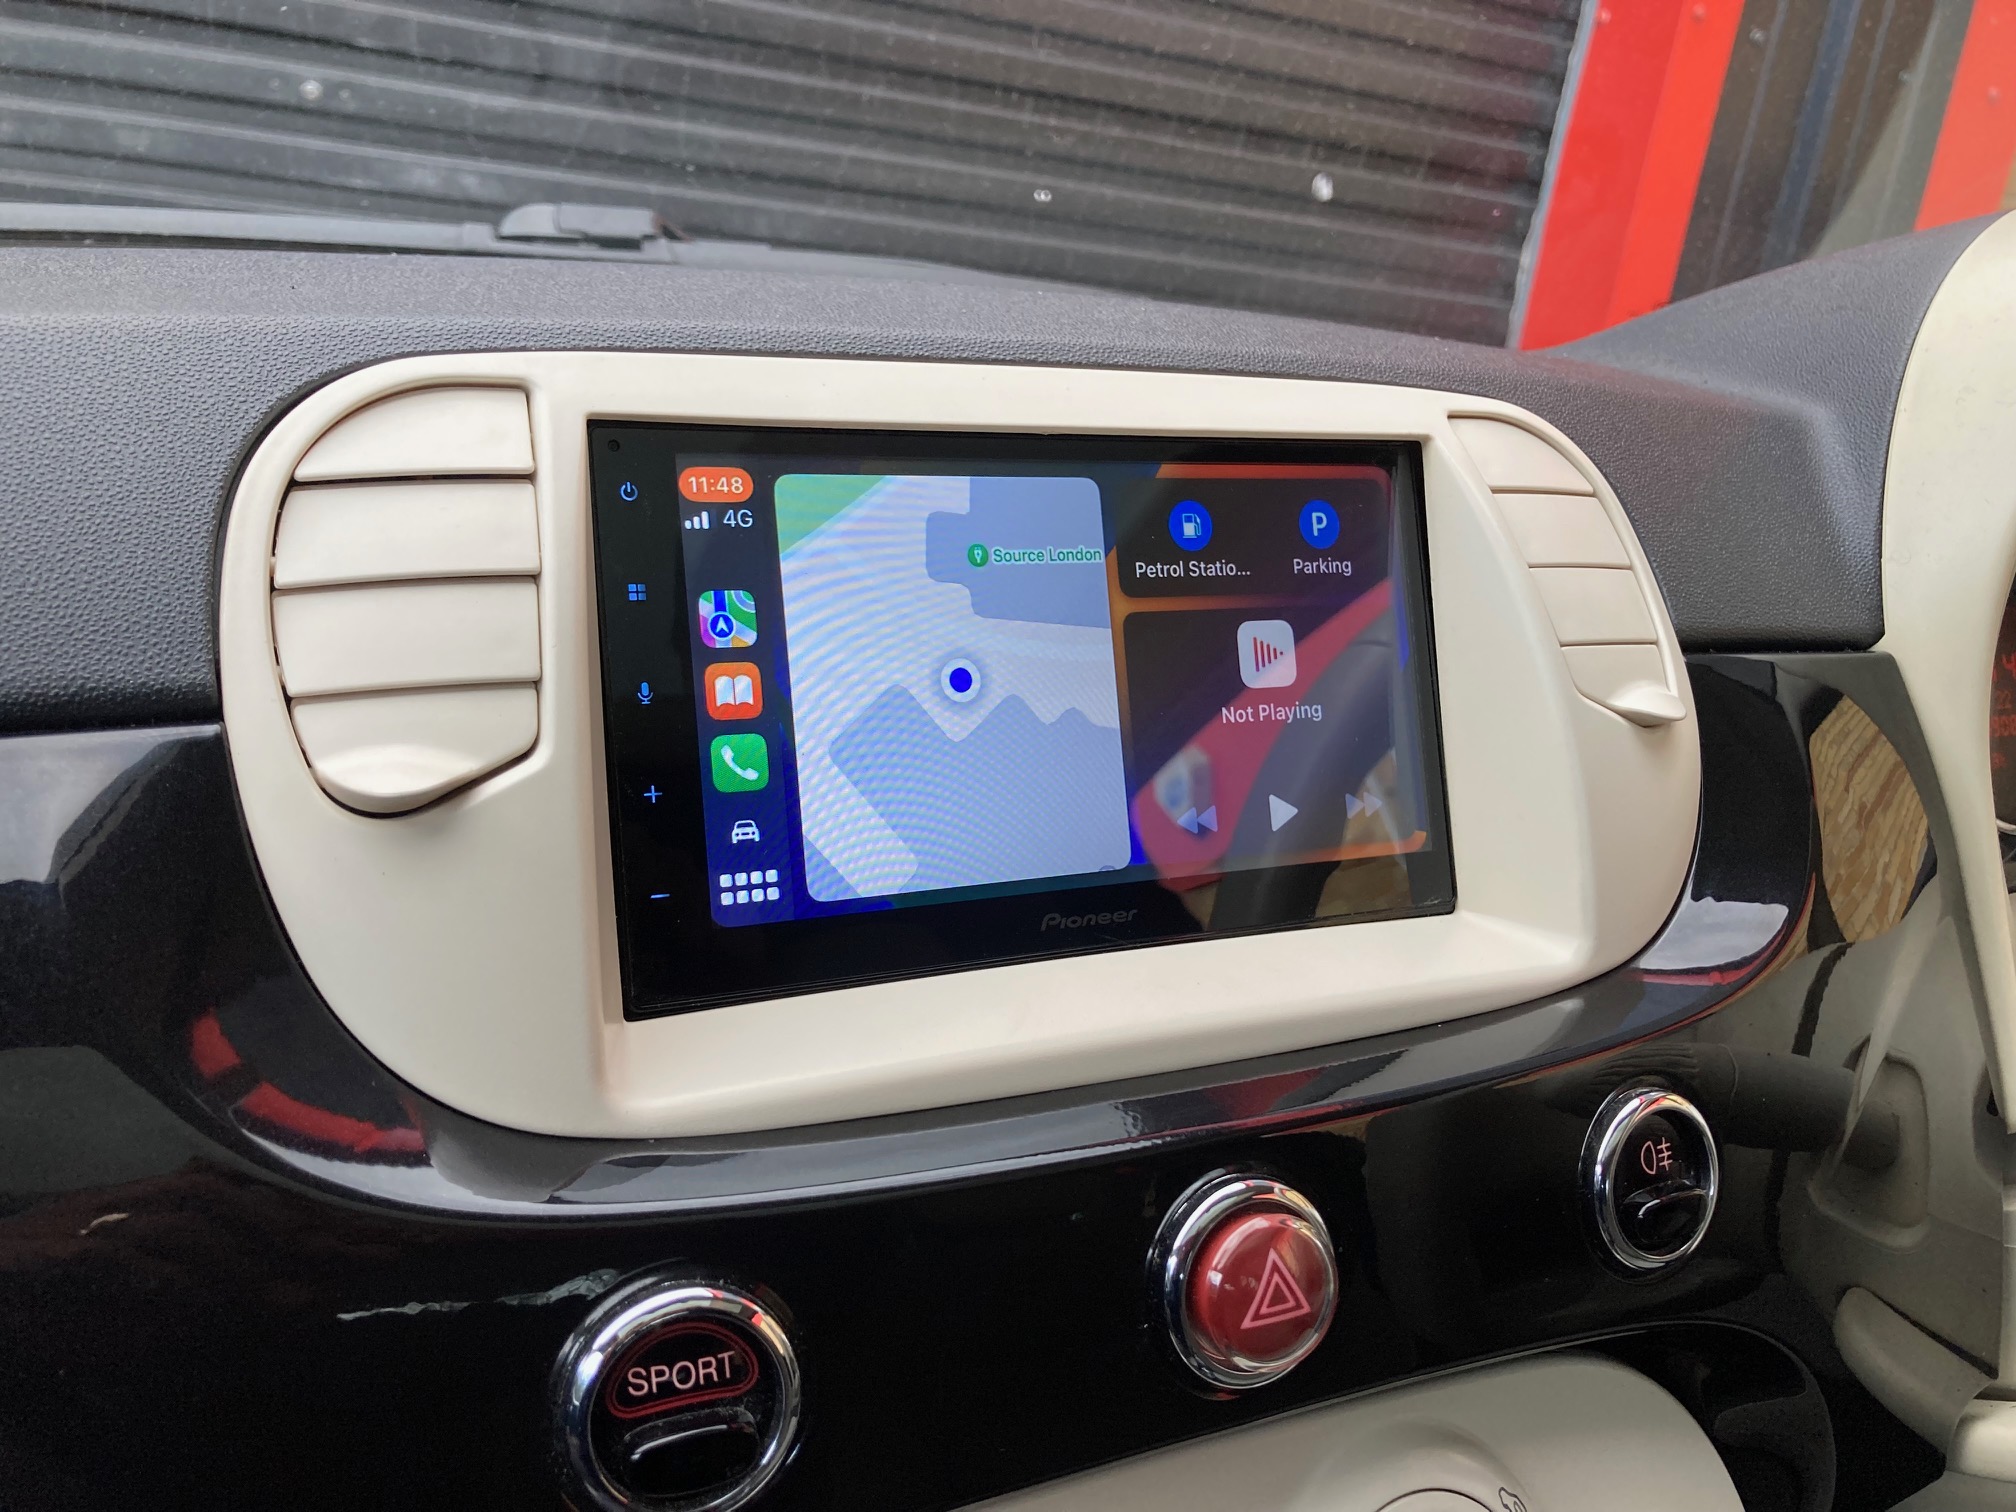 Fiat 500 2015 model Upgraded with Pioneer SPH-DA360DAB CarPlay